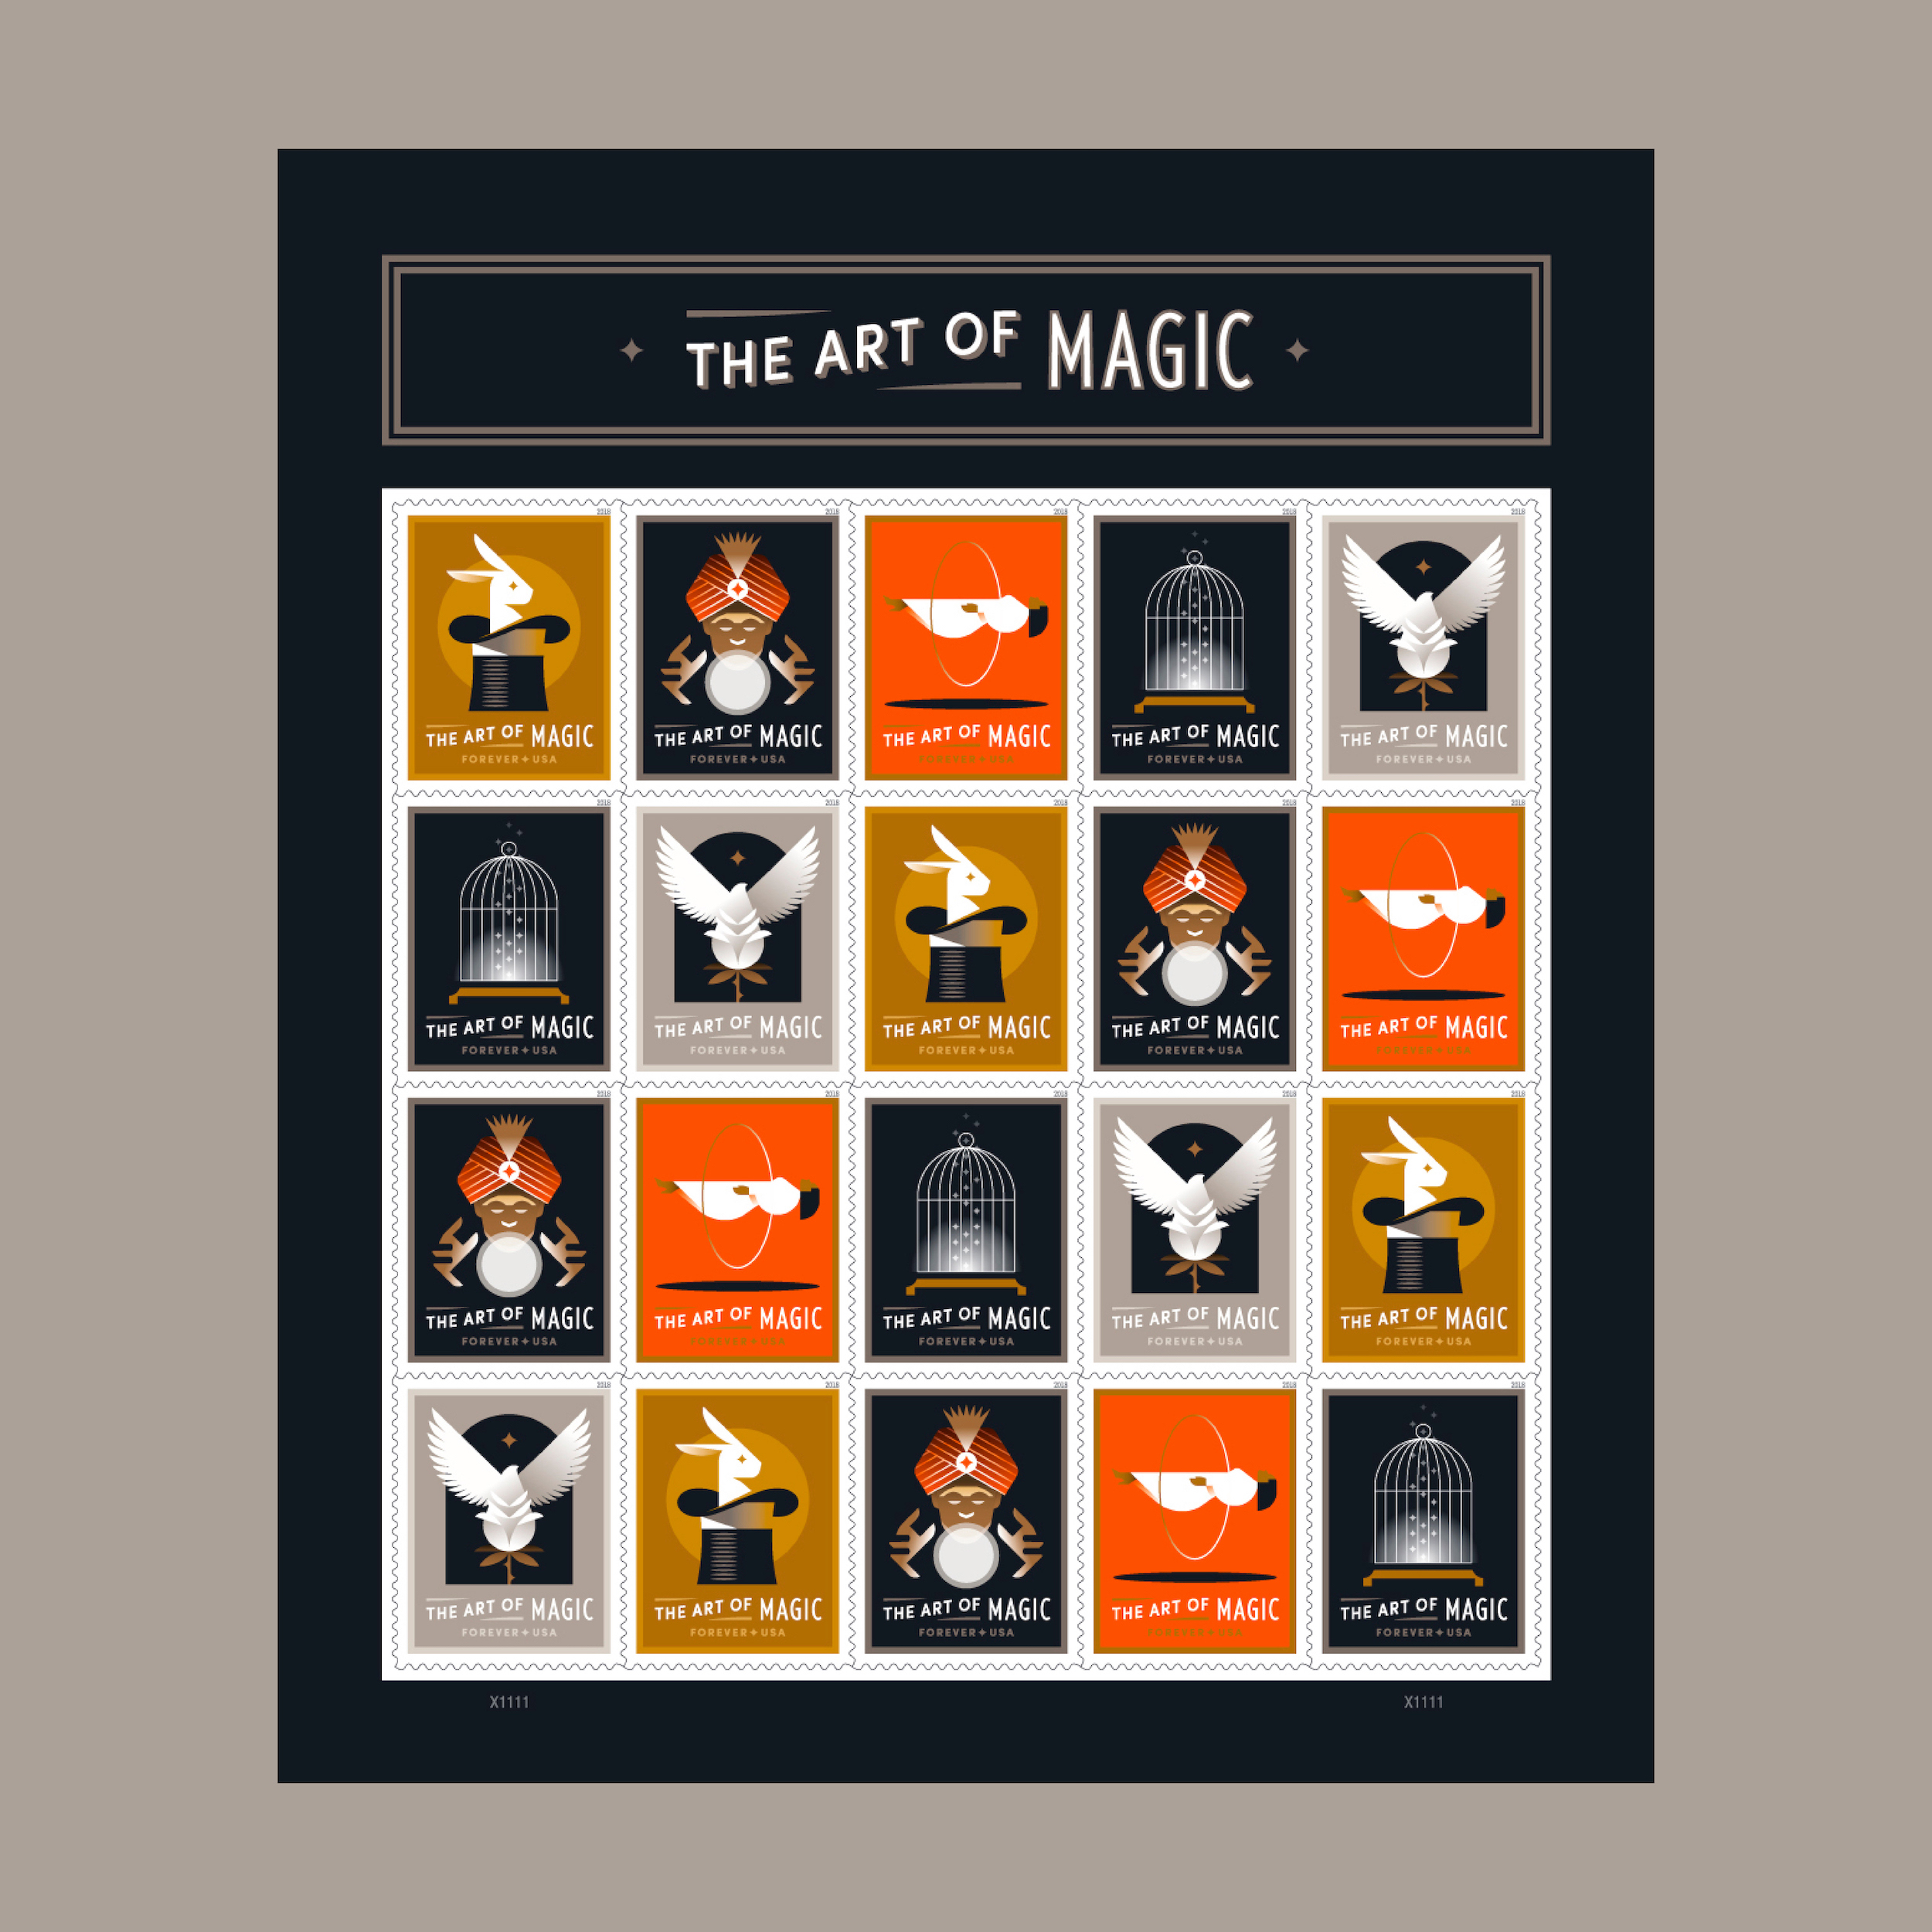 Art of Magic stamp pane